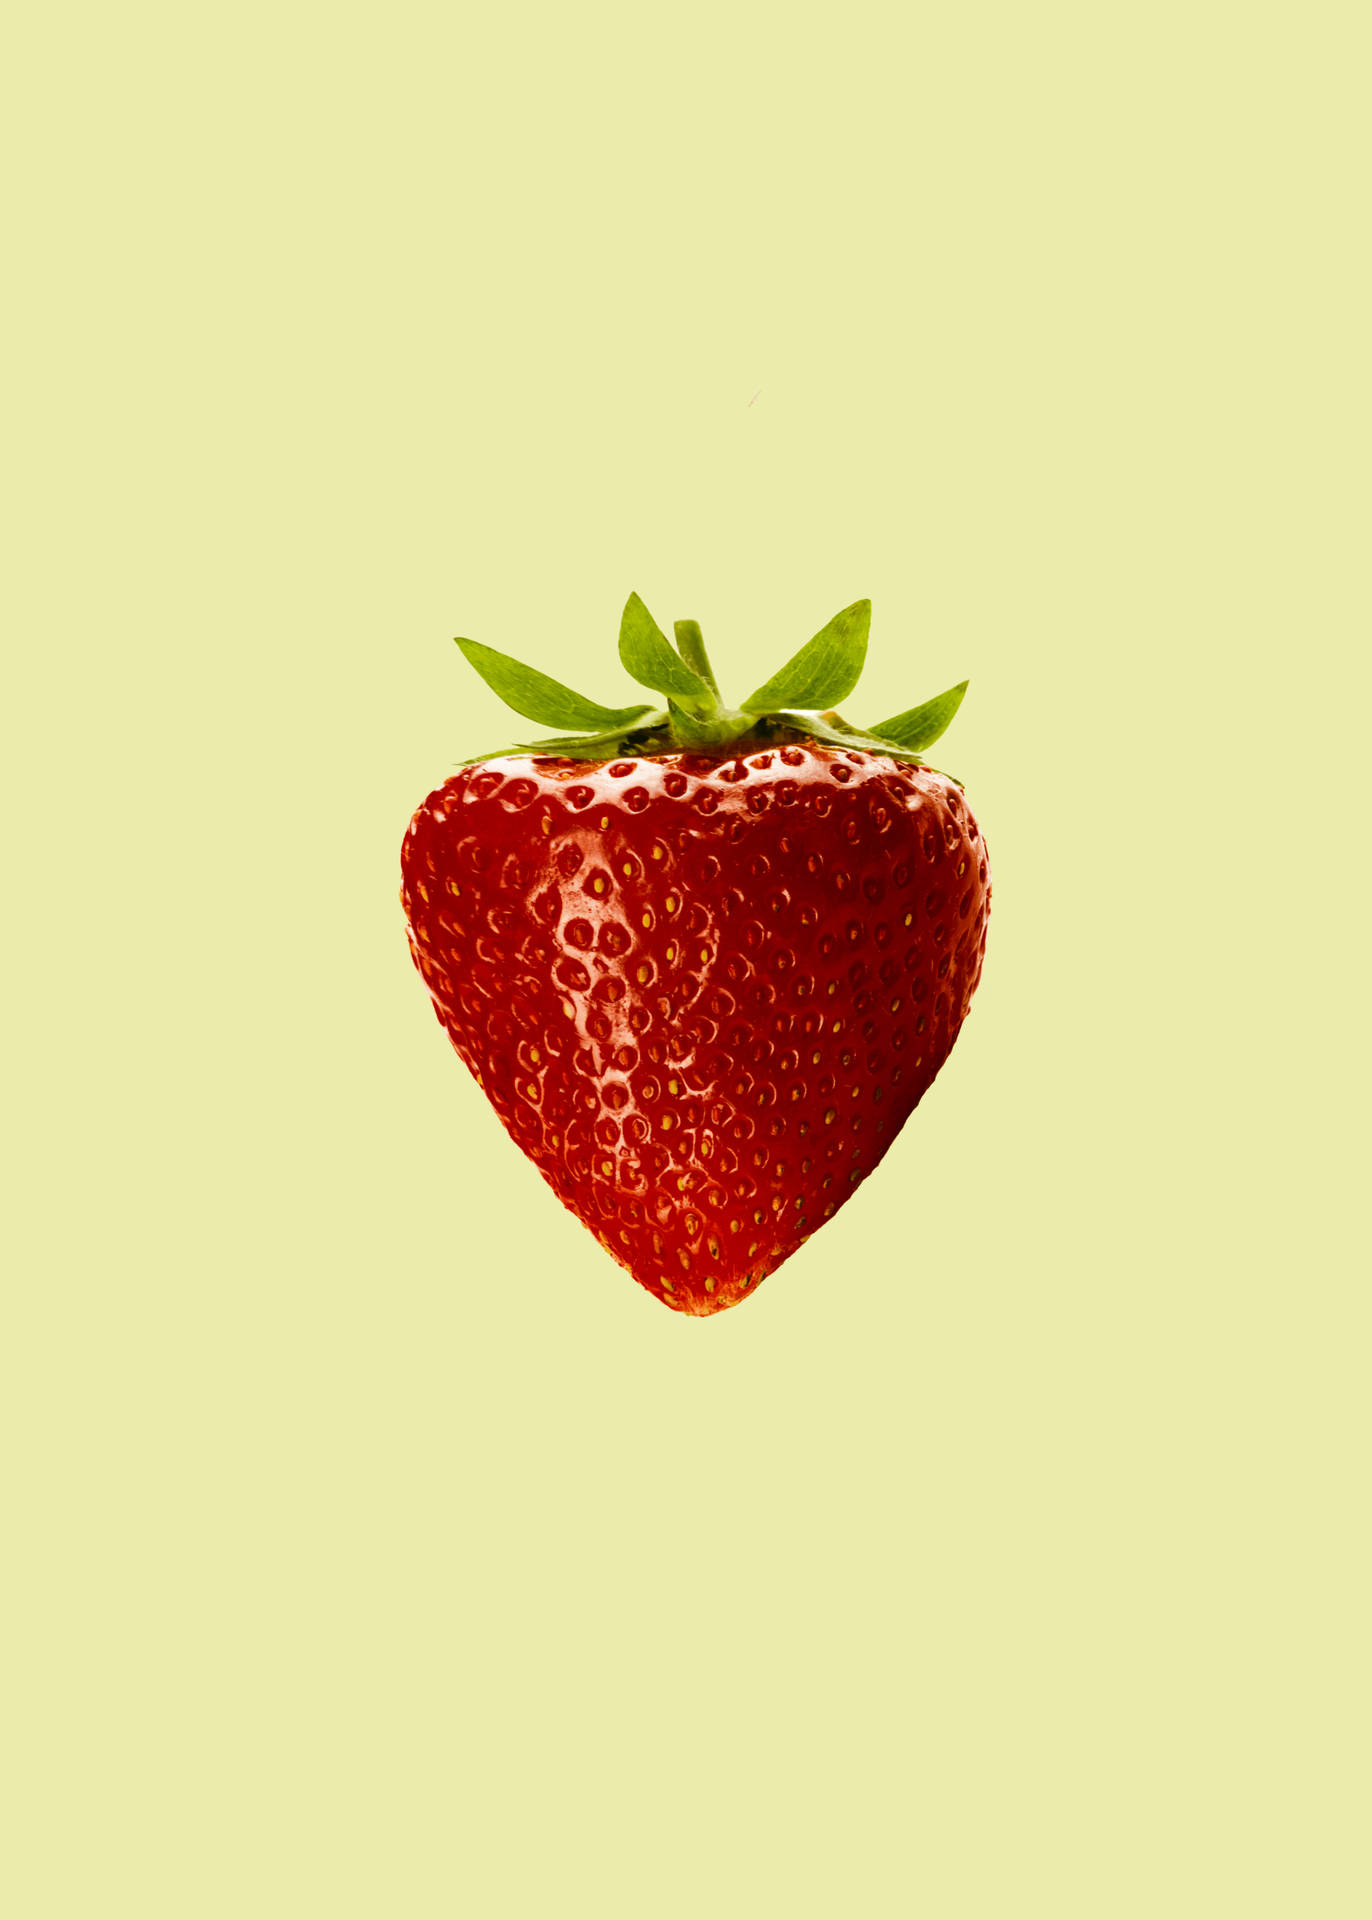 Strawberry Fruit Minimalist Photograph